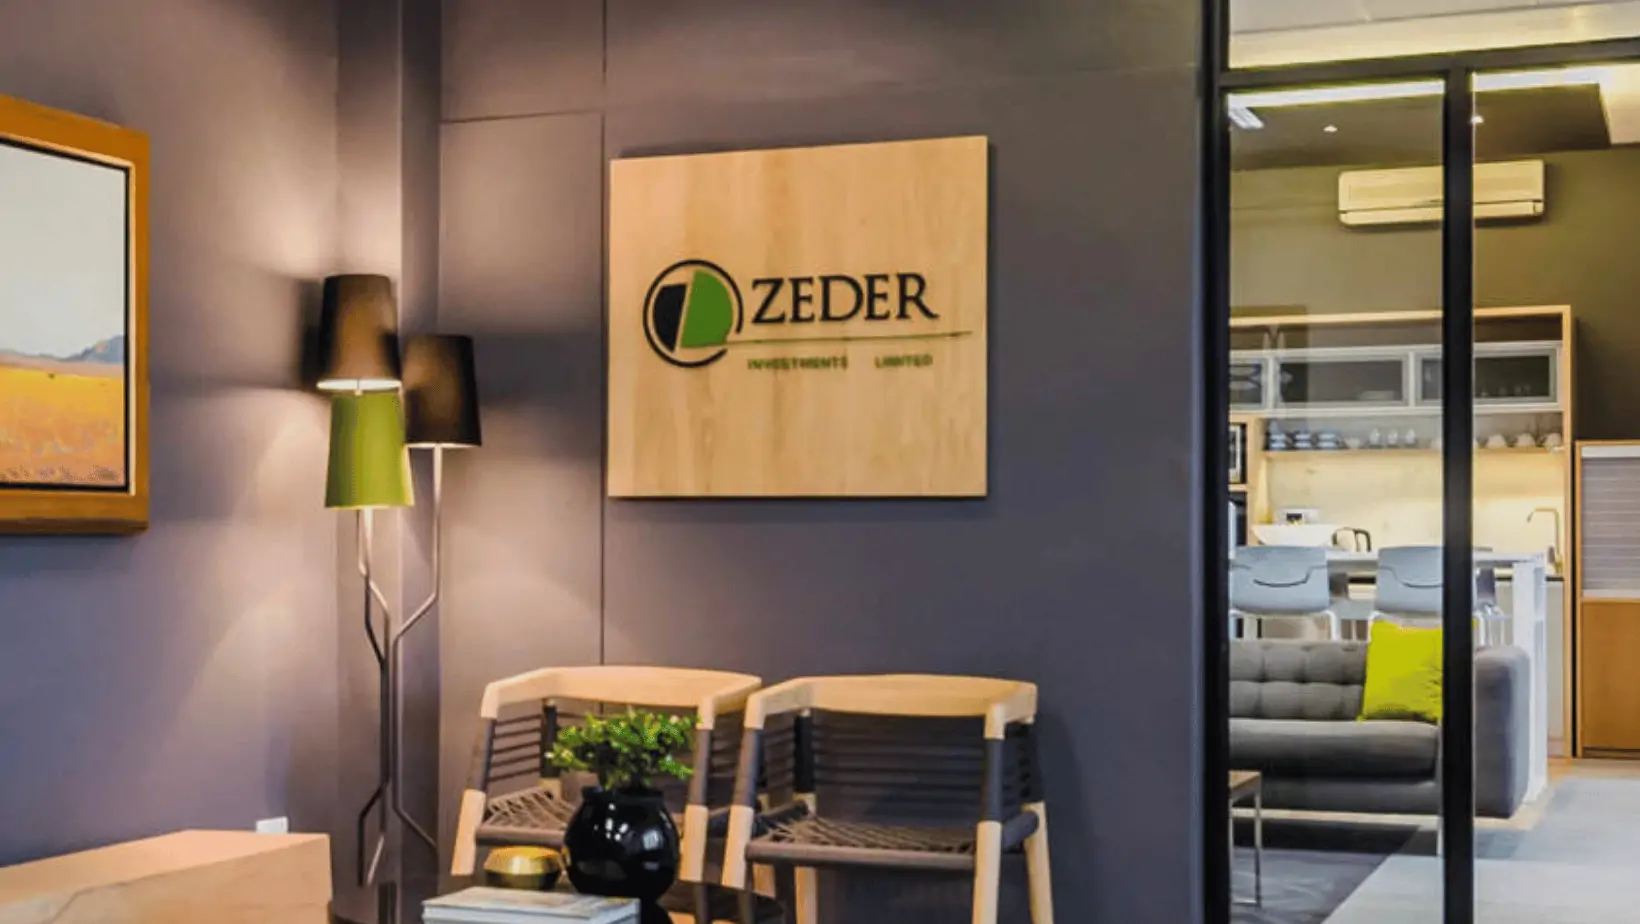 Zeder Investments Limited Announces Special Dividend Declaration